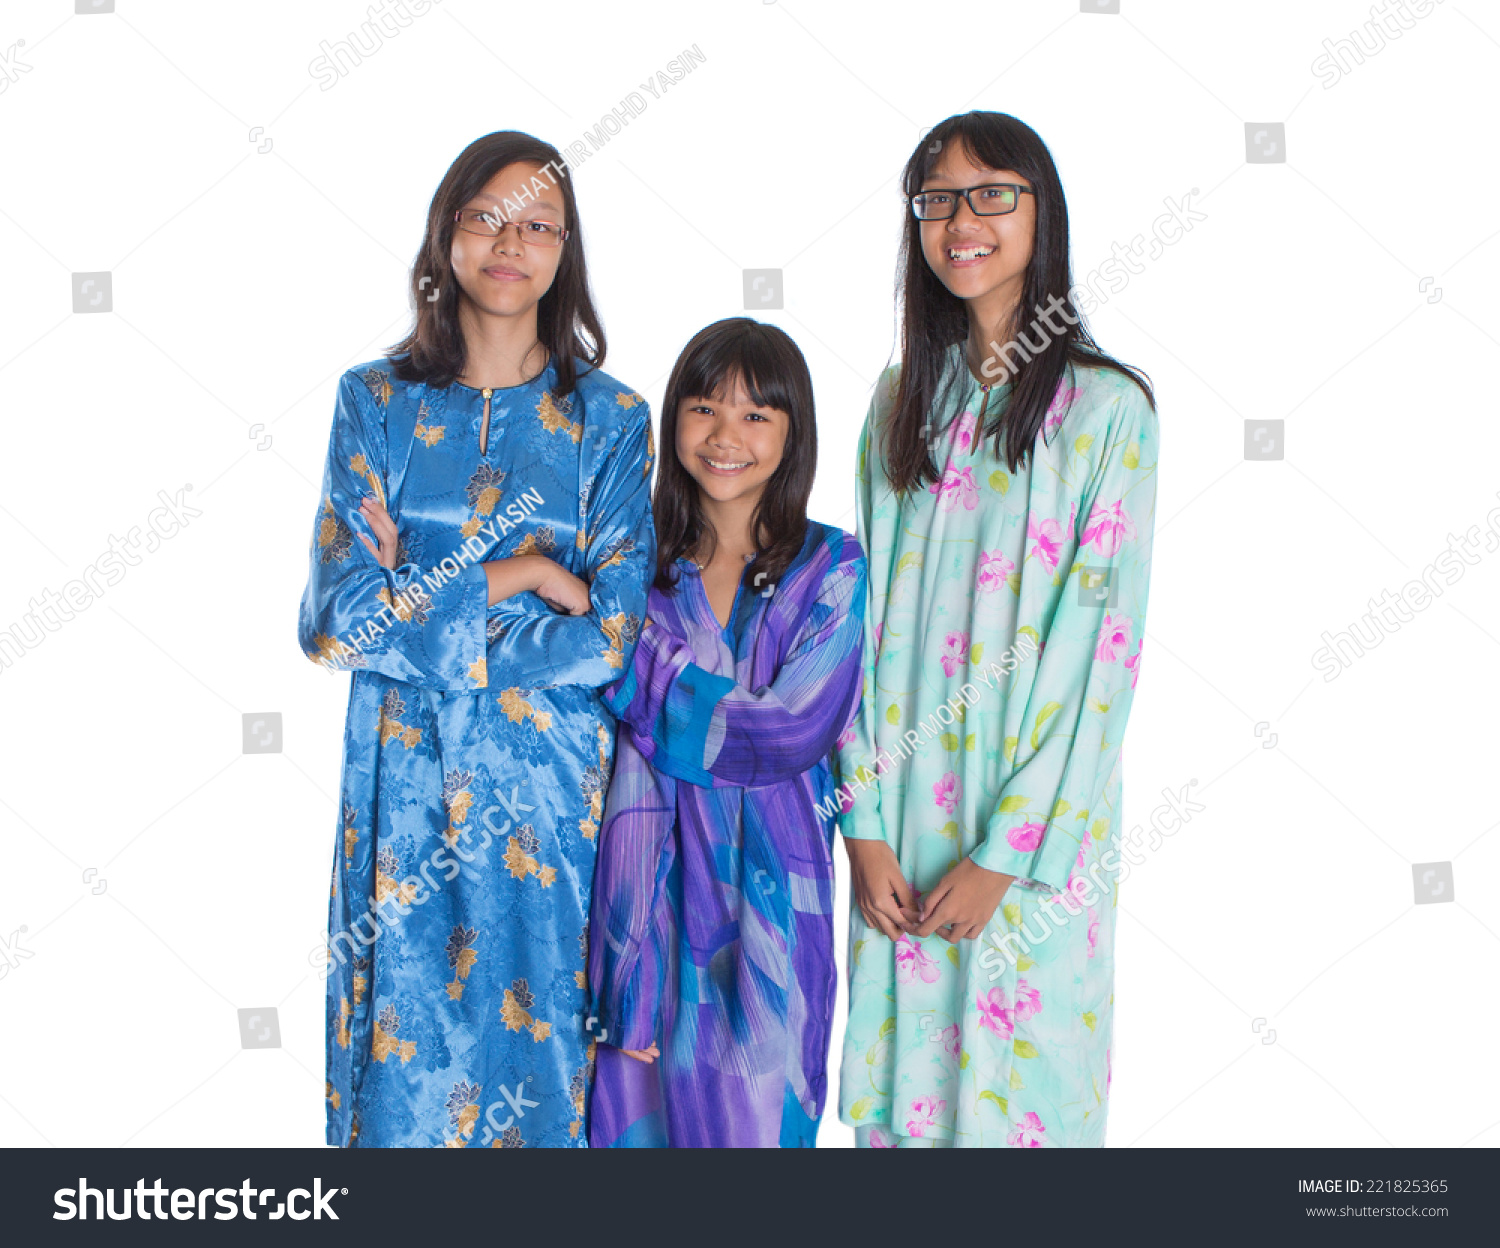 teenage traditional attire